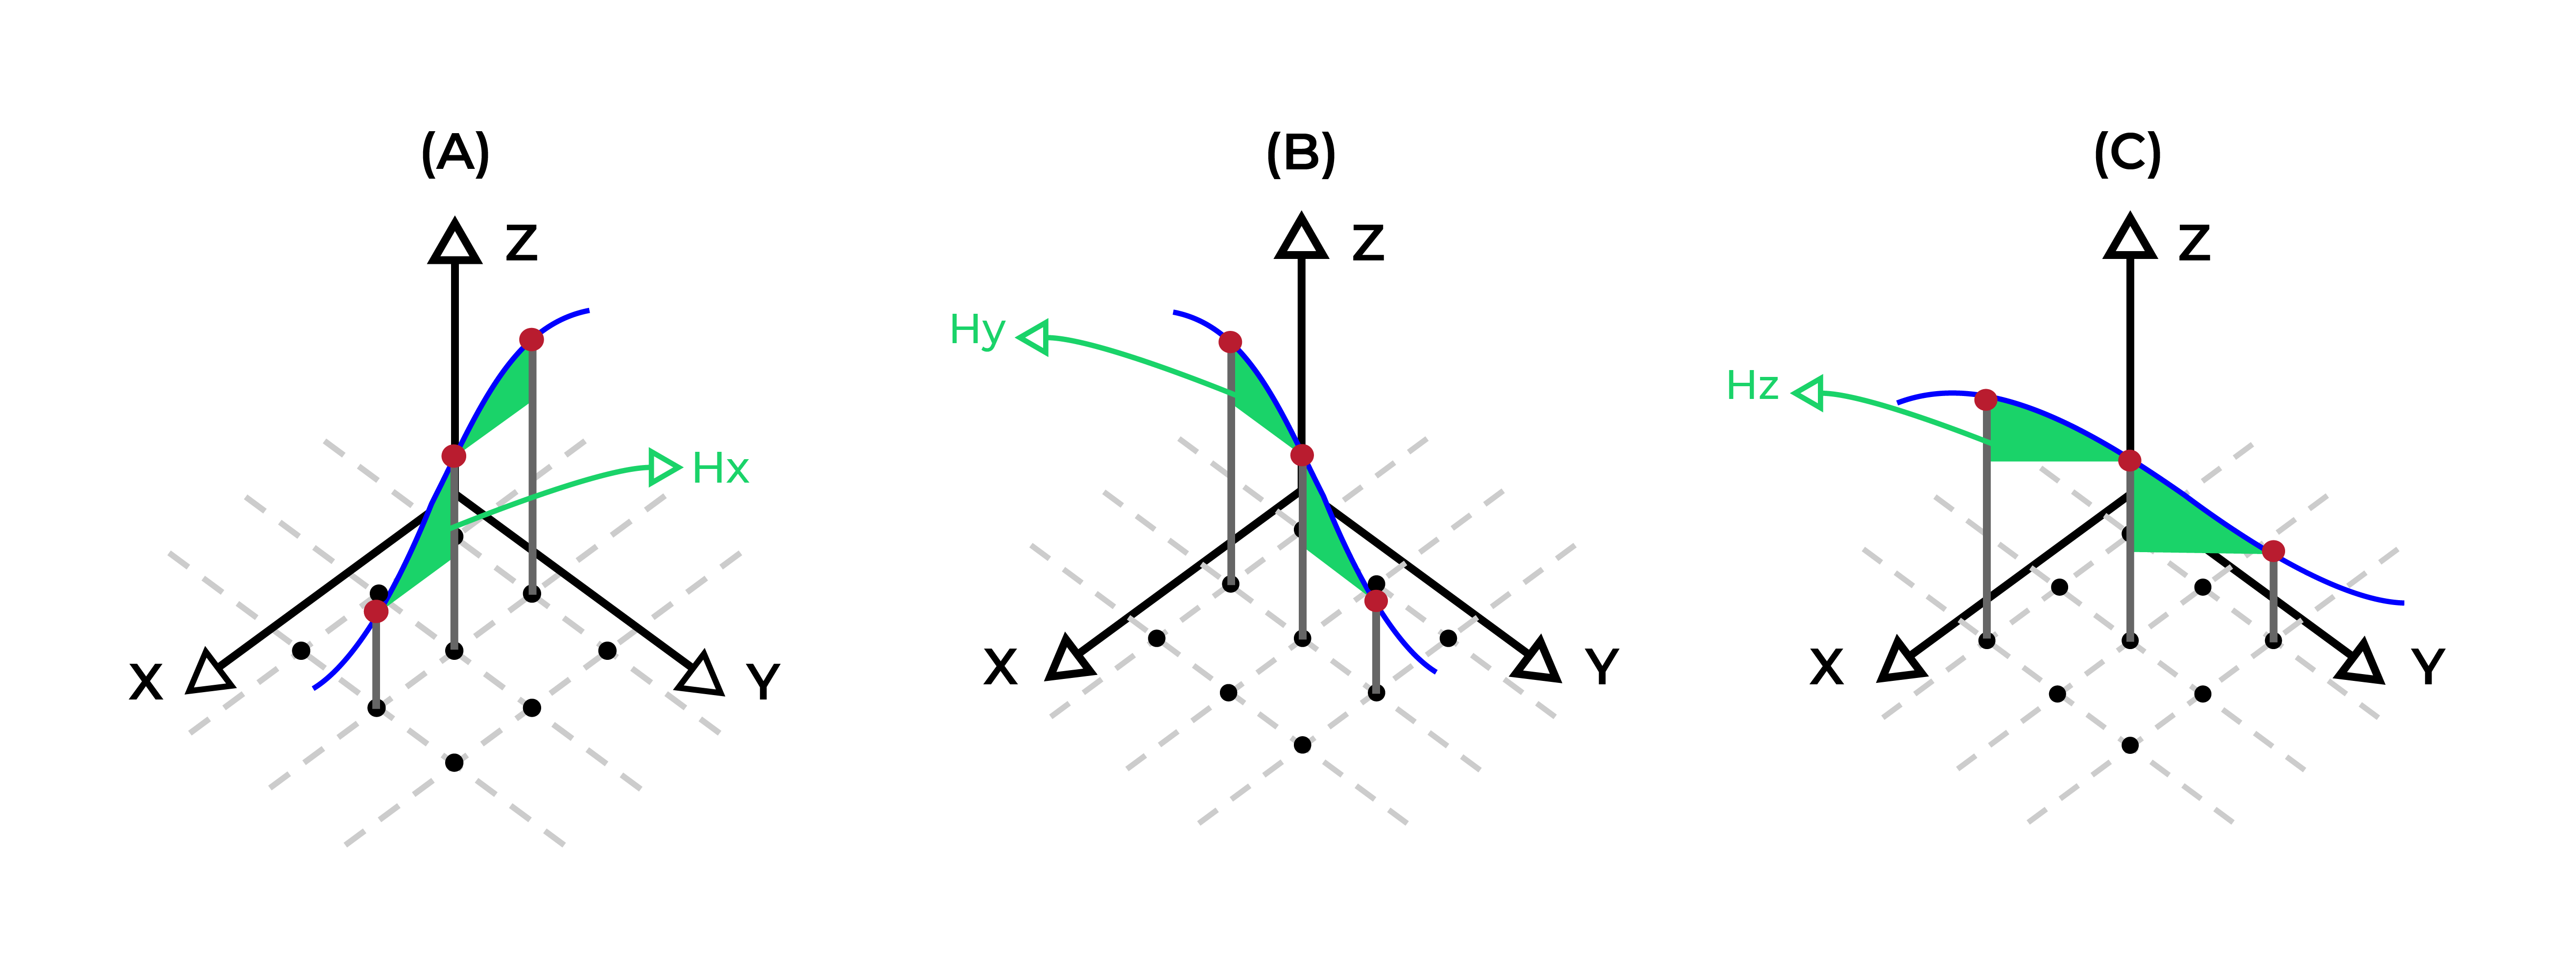 Example of slope constraints in mining optimization algoritm